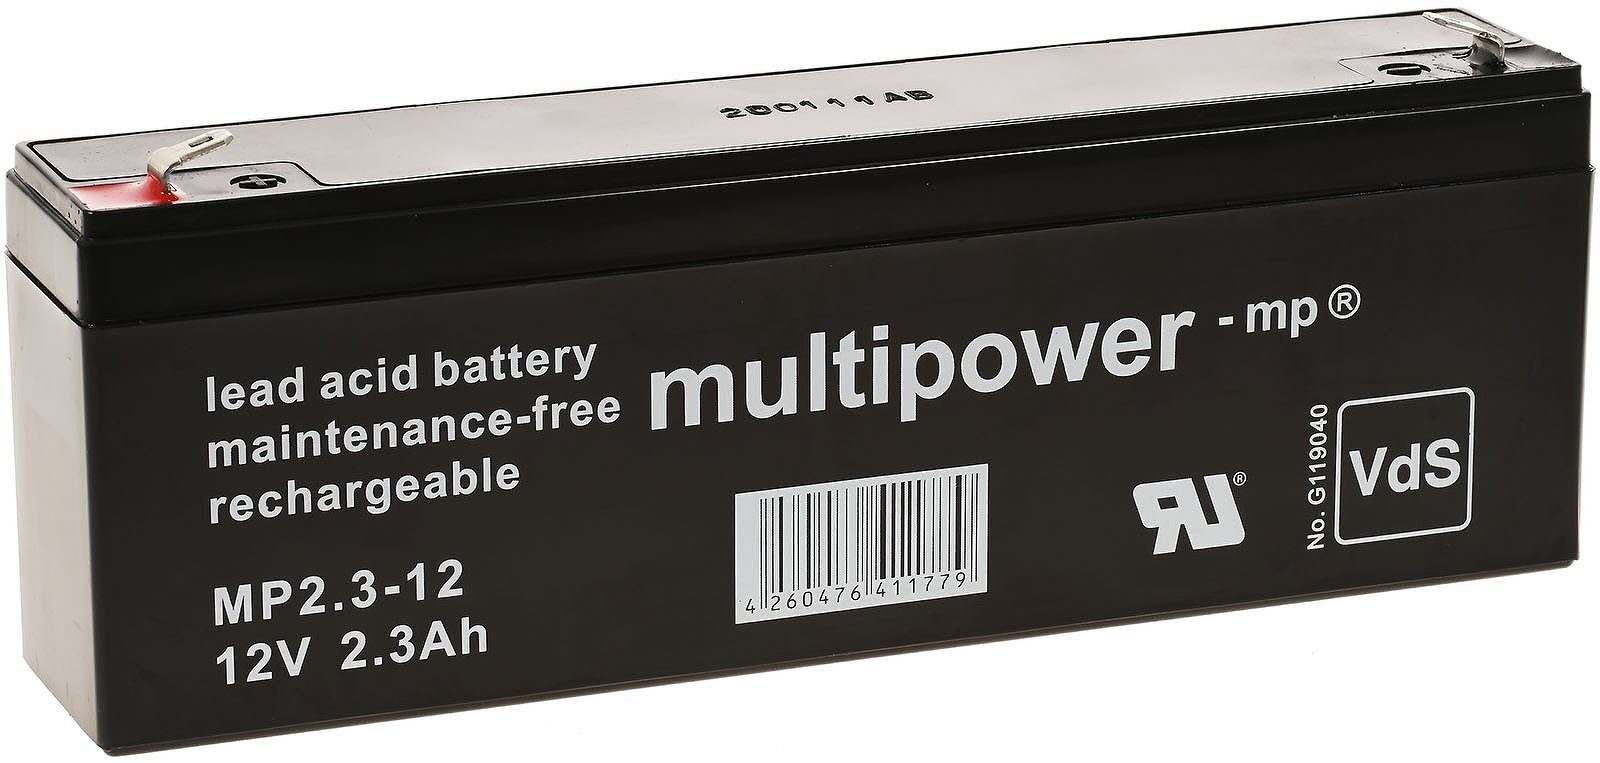 Powery Bleiakku (multipower) kompatibel zu MP2.2-12 Vds Bleiakkus 2300 mAh (12 V)